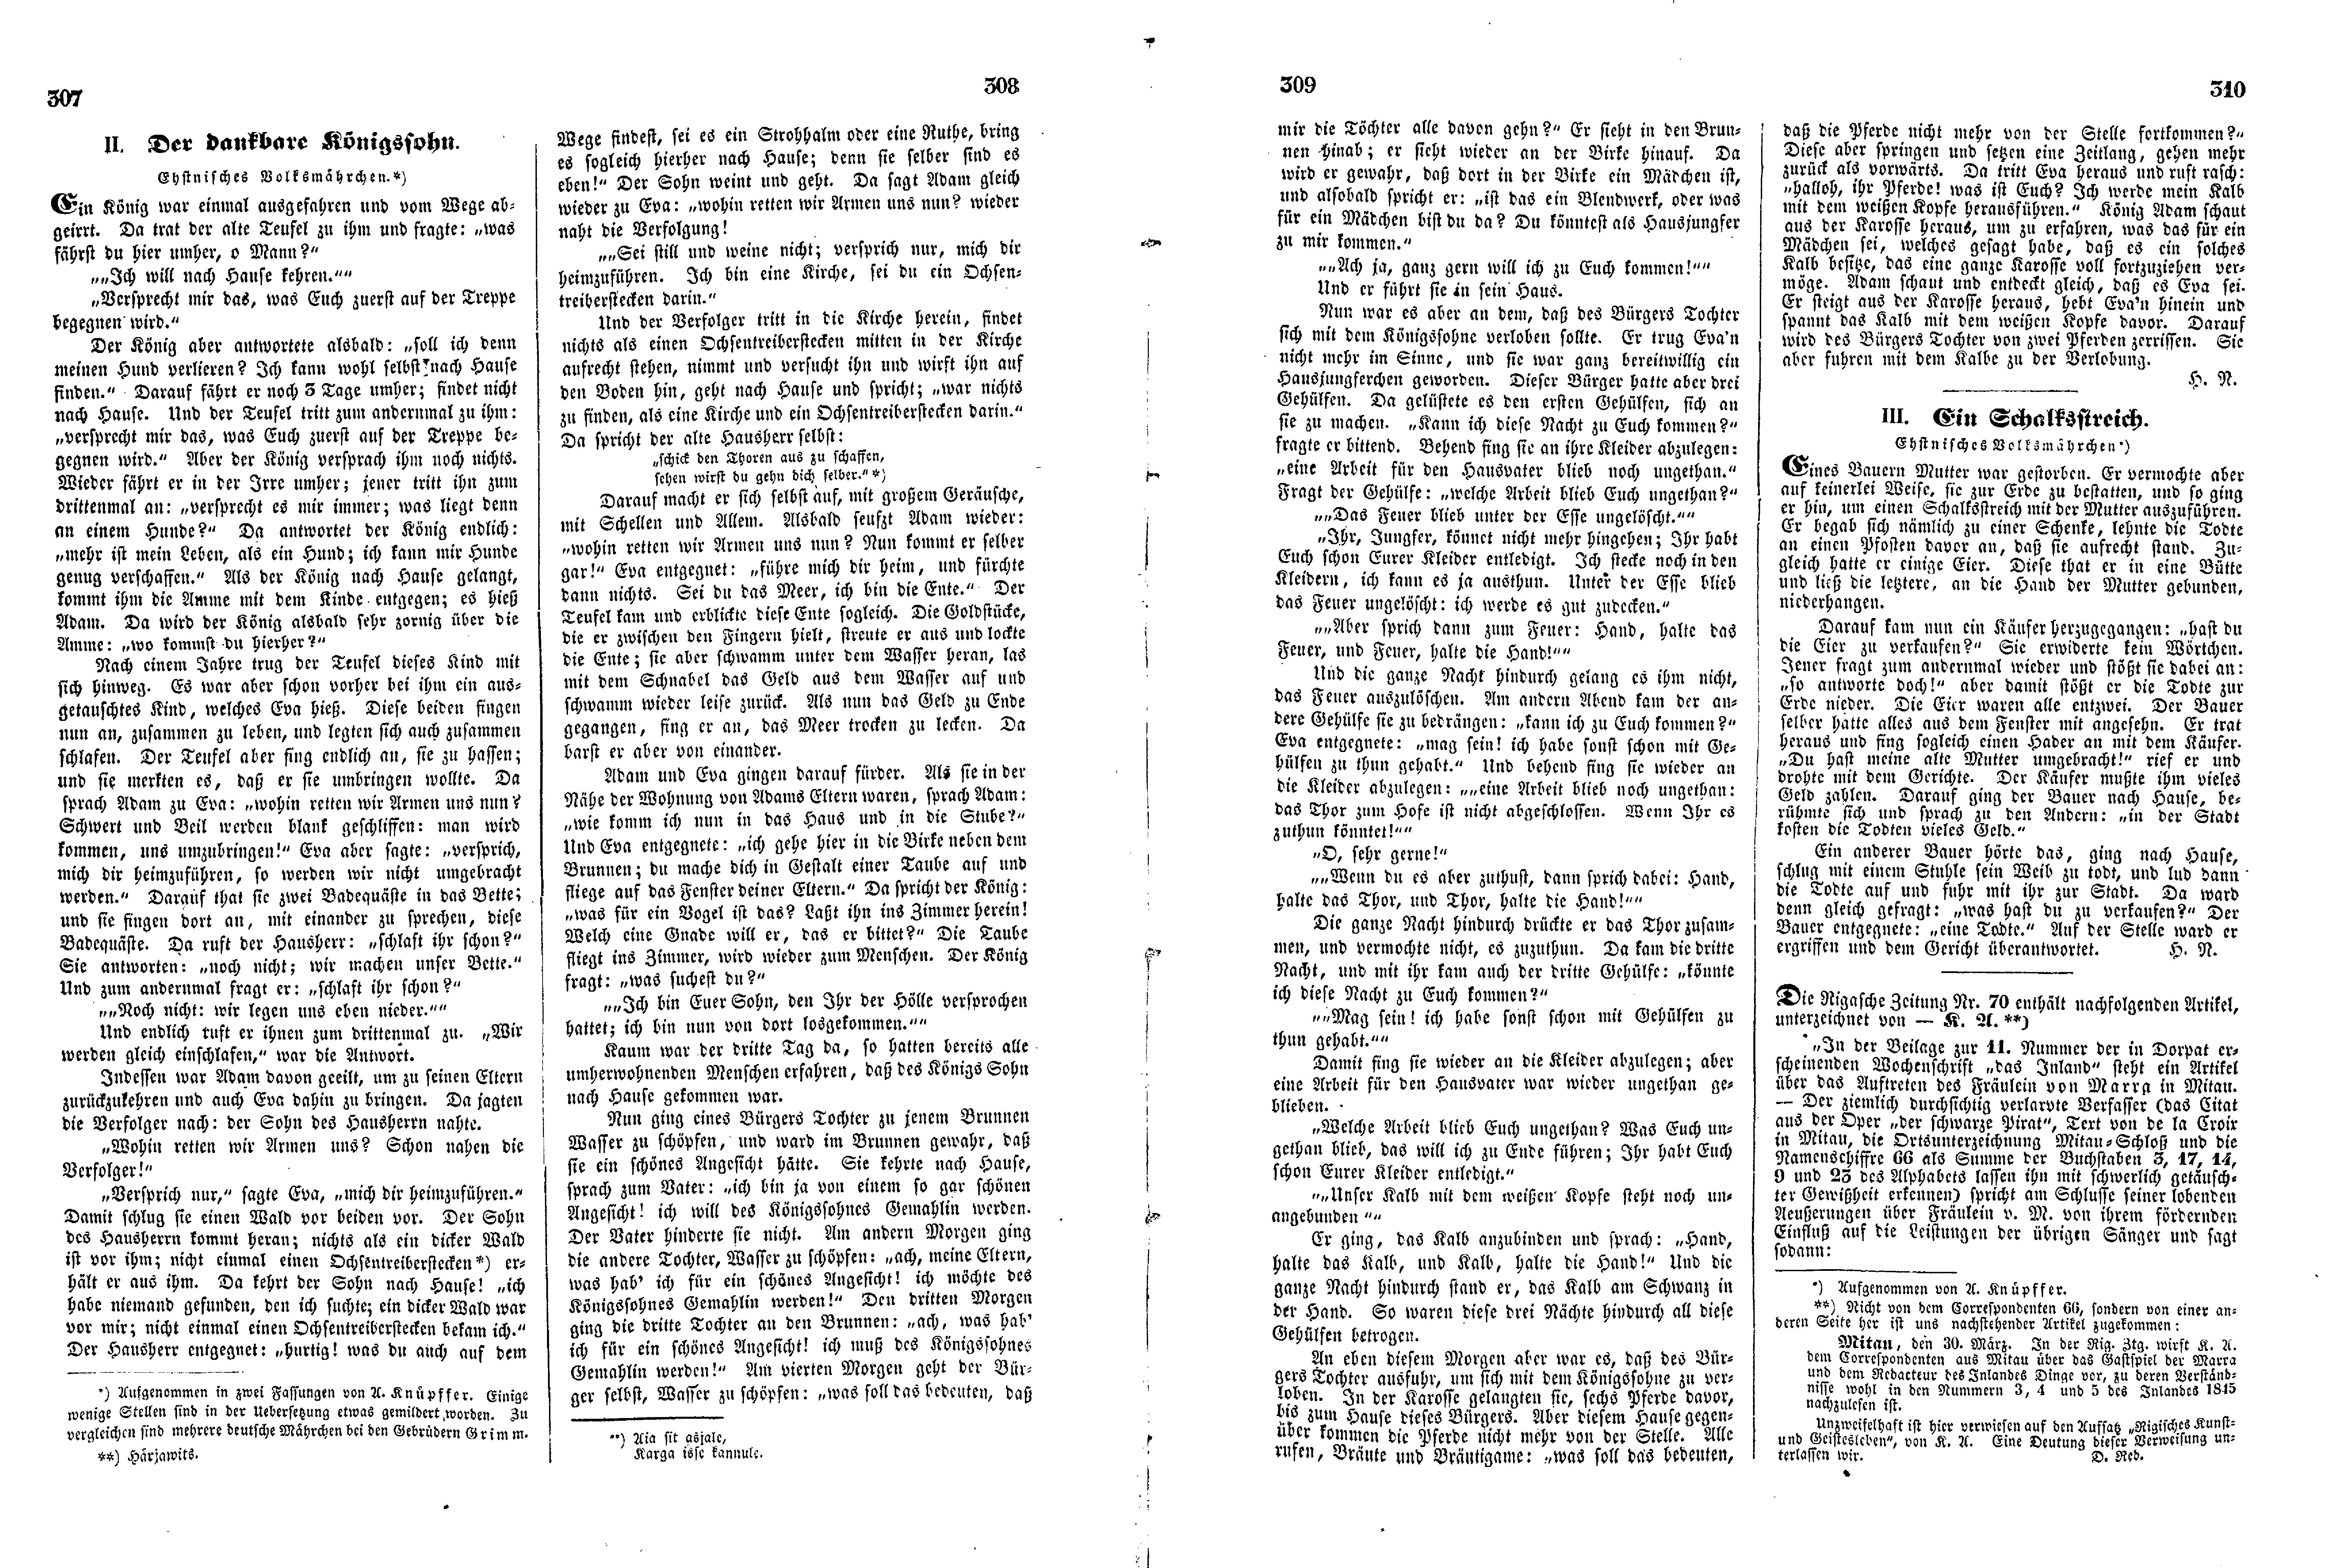 Das Inland [12] (1847) | 82. (307-310) Main body of text